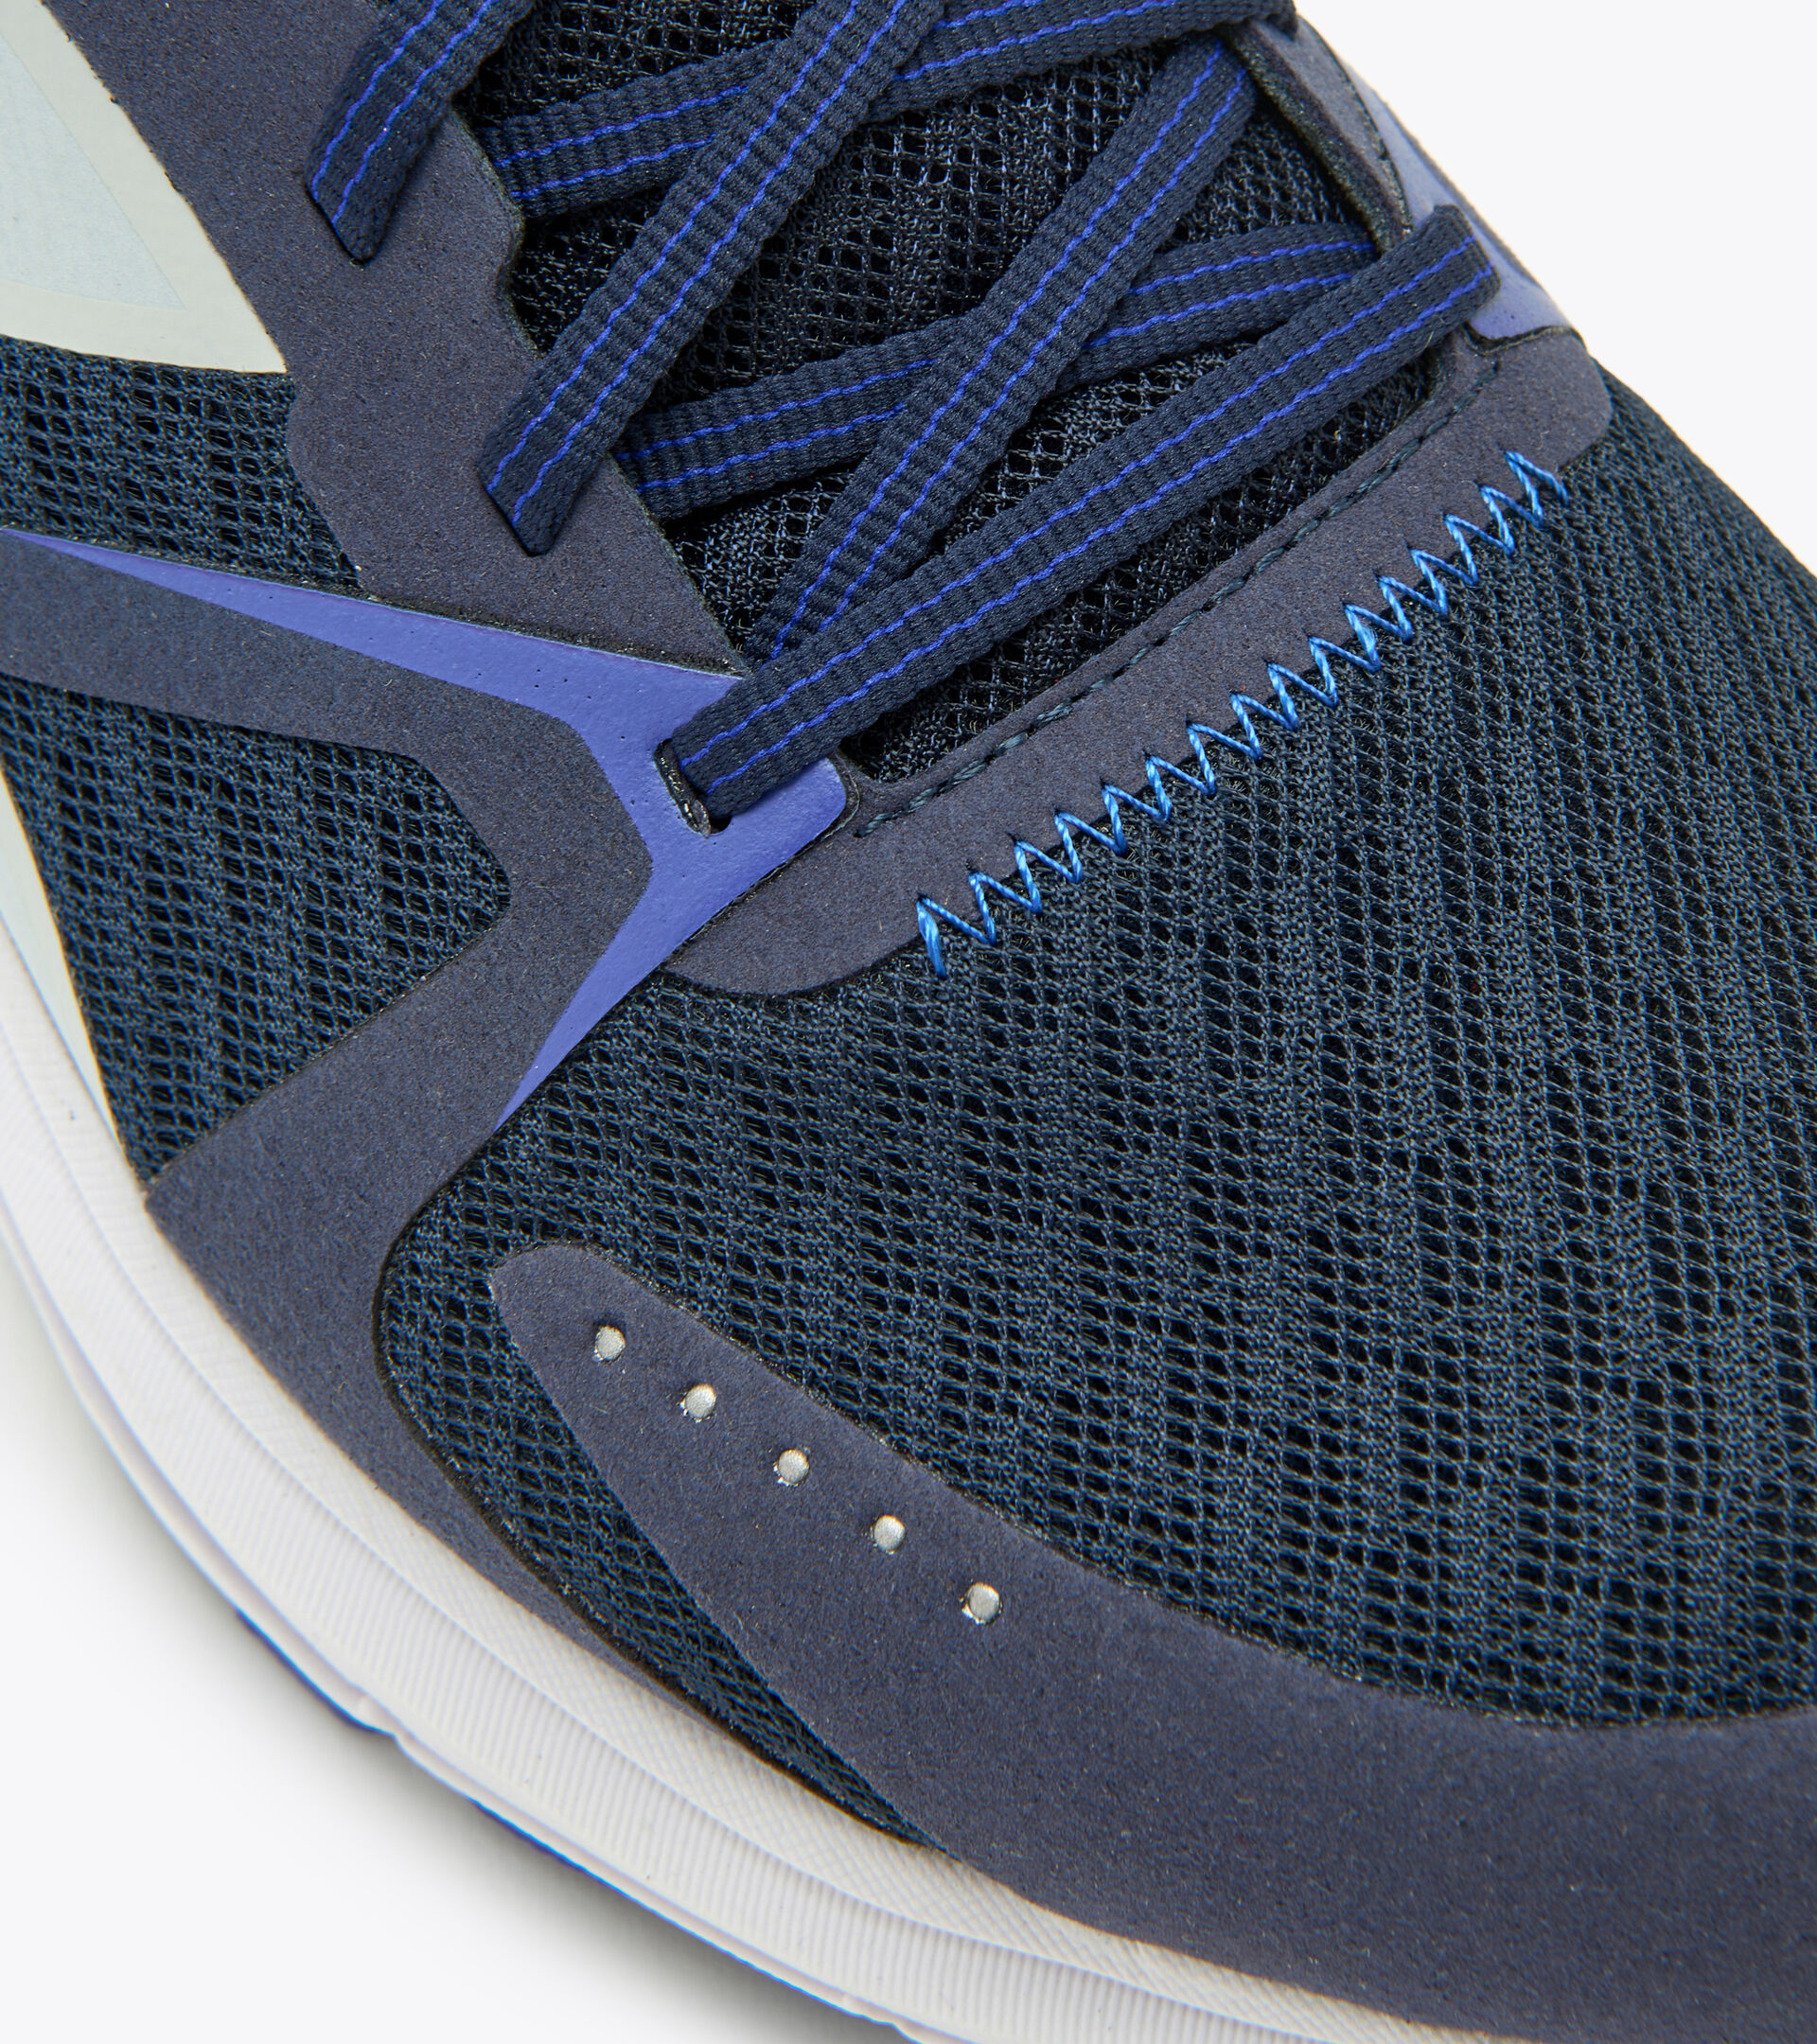 Running shoes - Men  MYTHOS BLUSHIELD 8 VORTICE WIDE BLUE CORSAIR/WHT/SURF THE WEB - Diadora